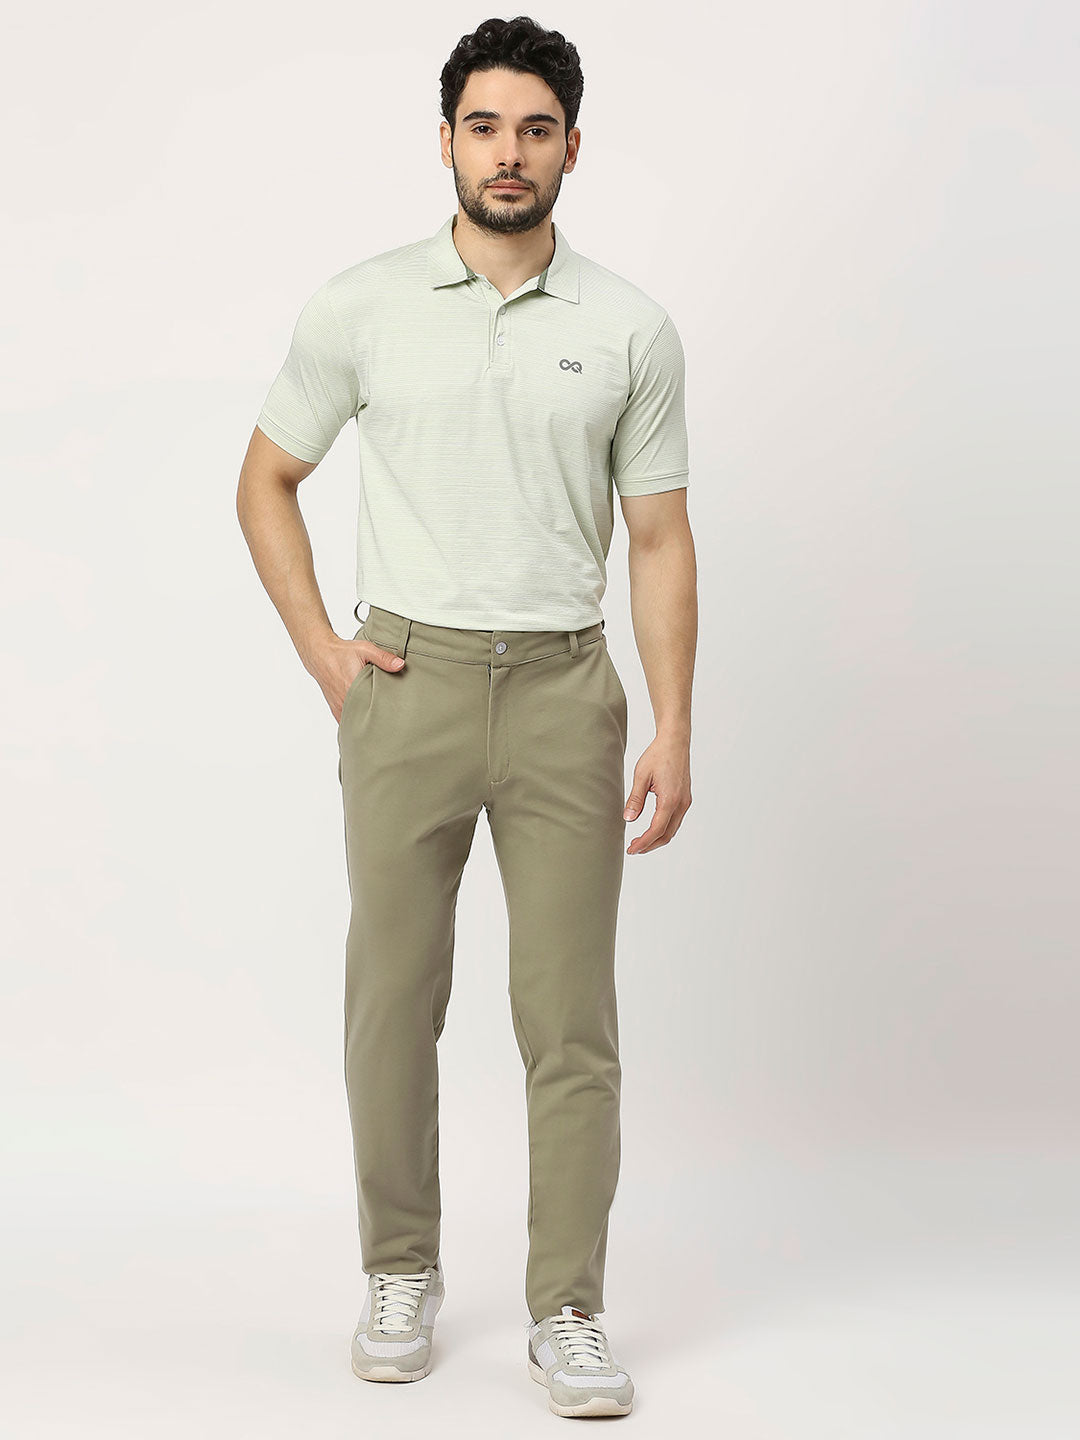 Men's Golf Pants - Olive Green